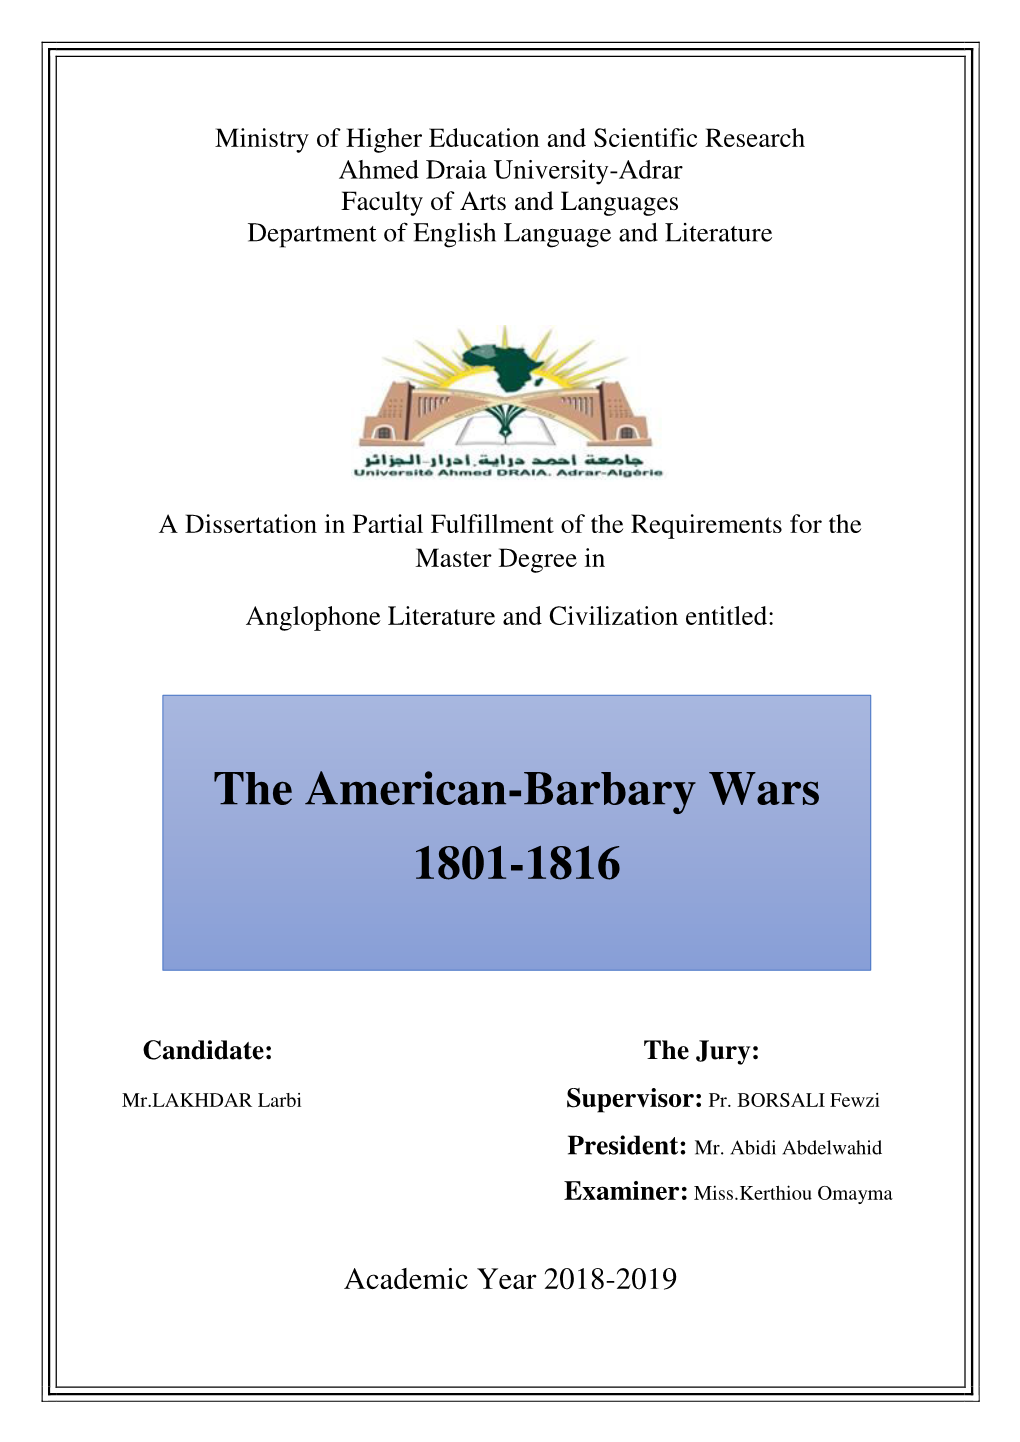 The American-Barbary Wars 1801-1816